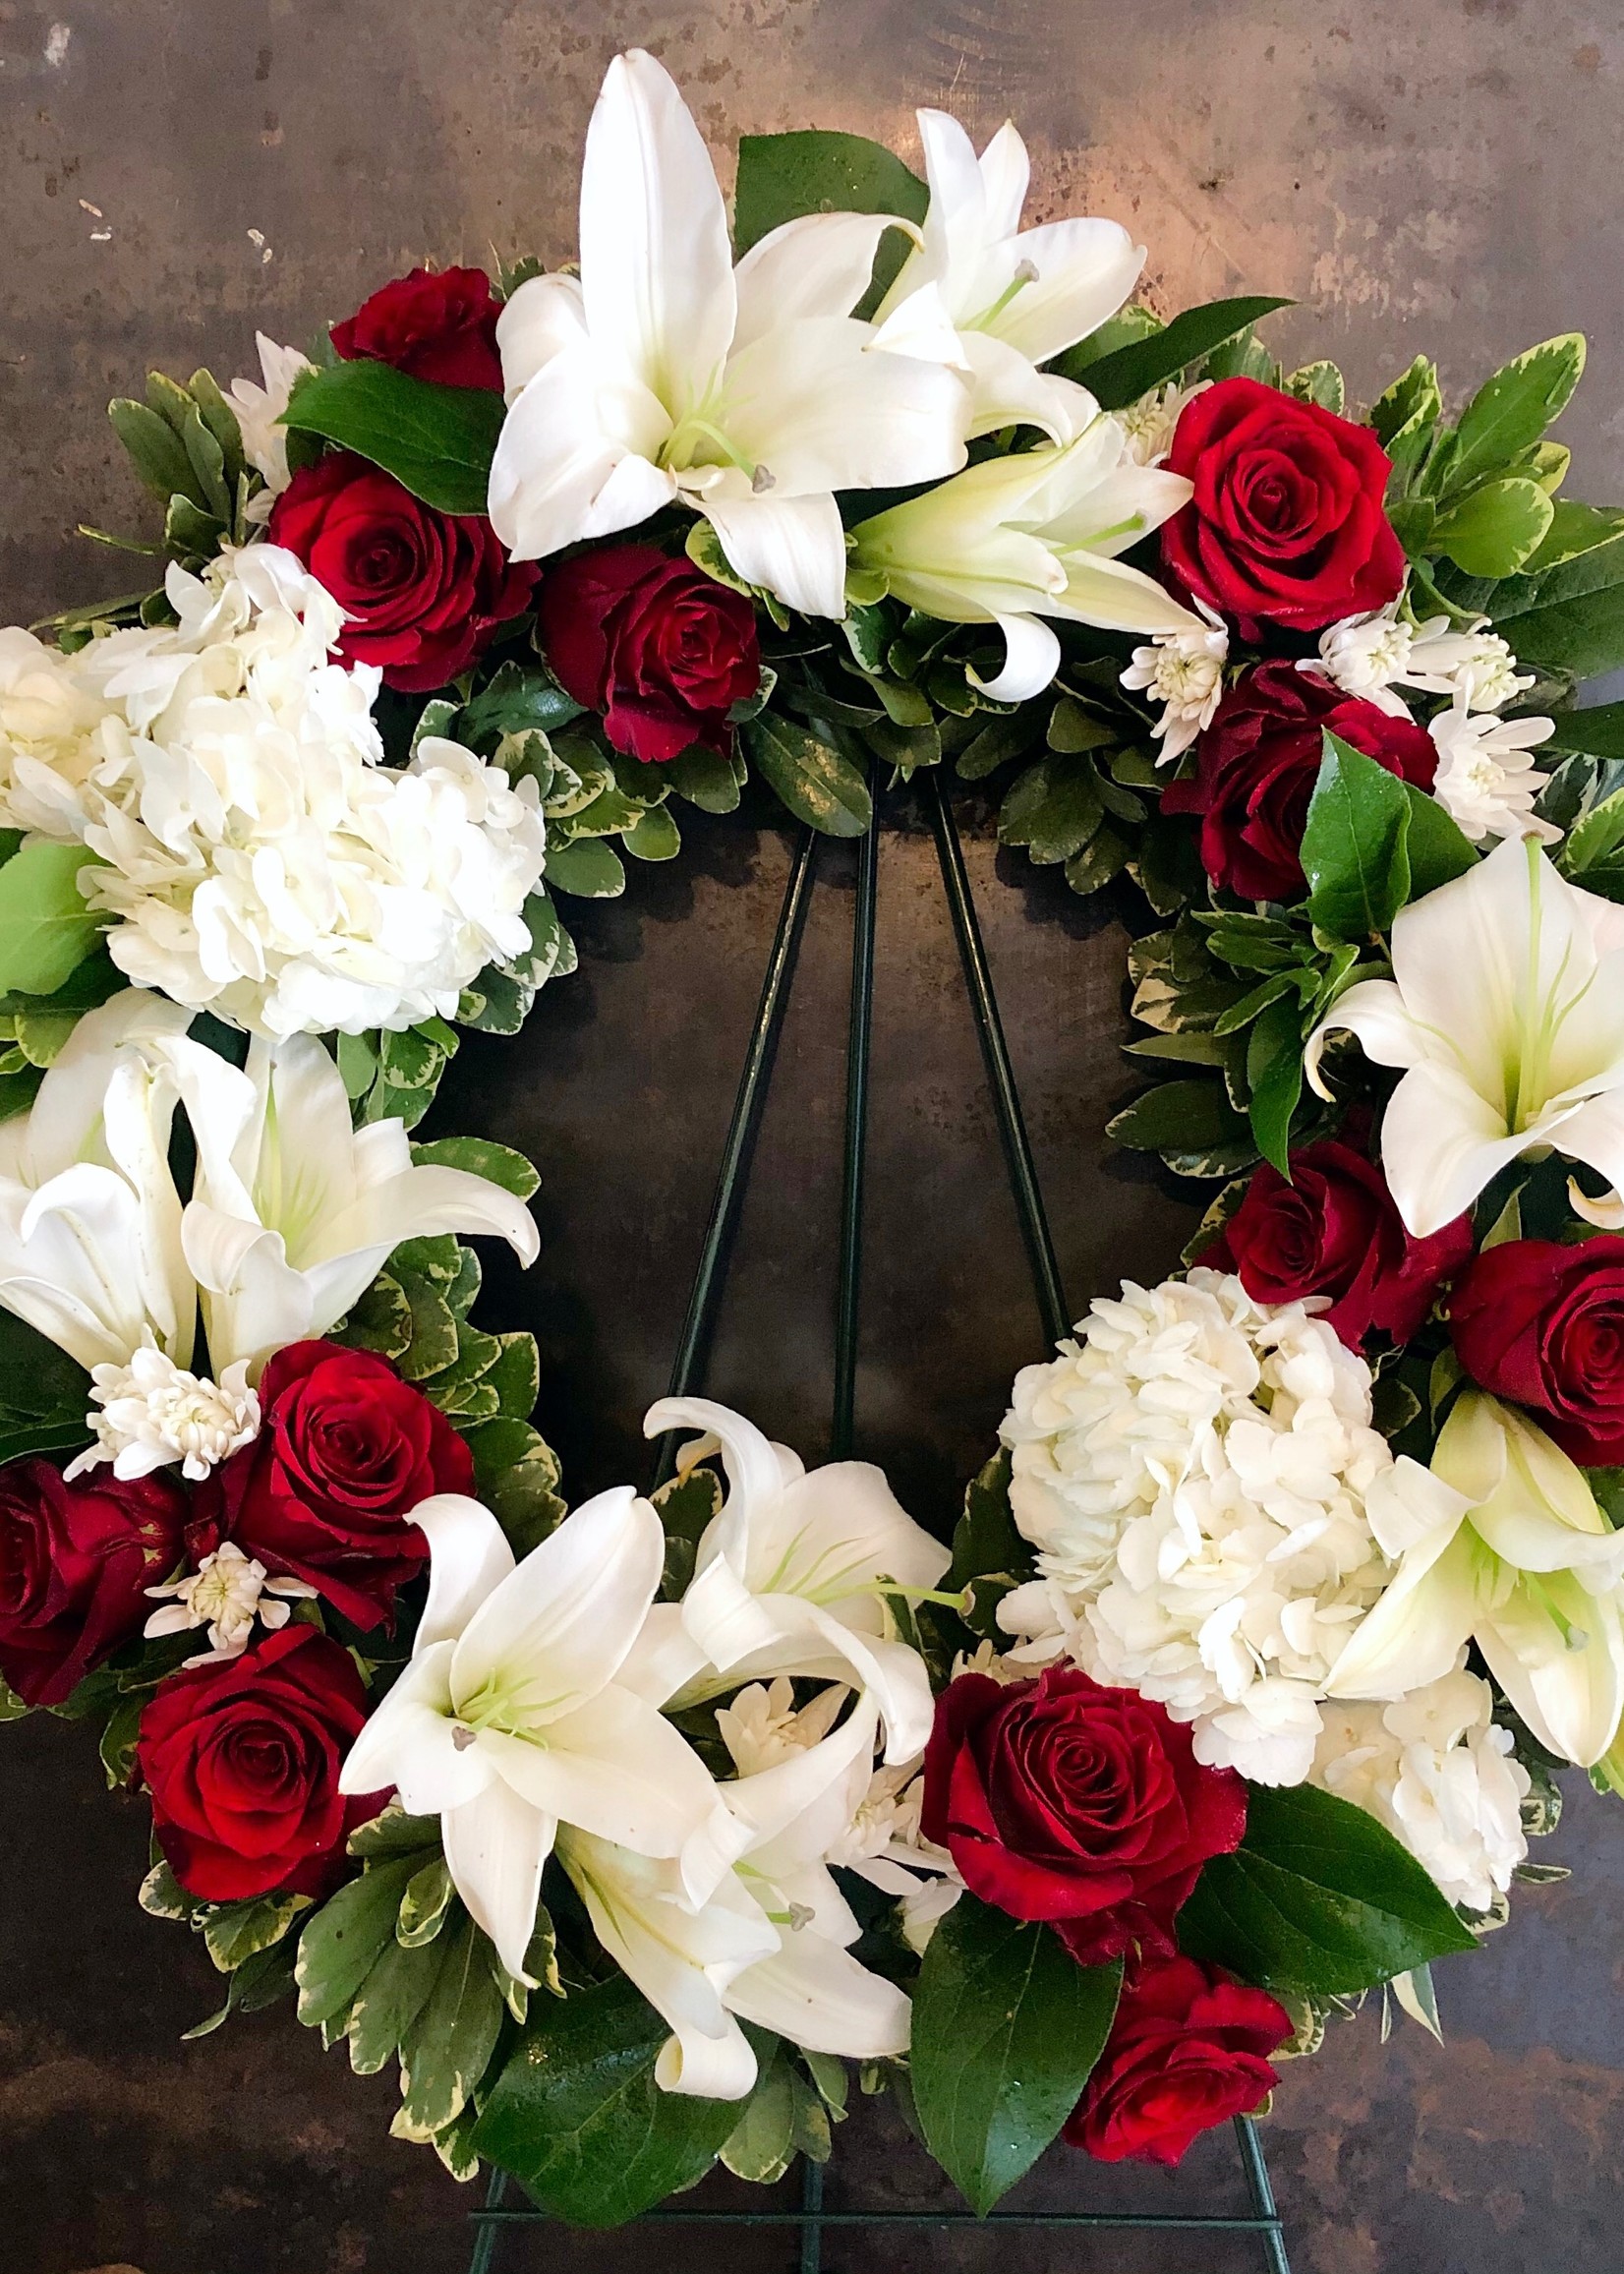 Funeral Arrangement - 24" Rose Wreath